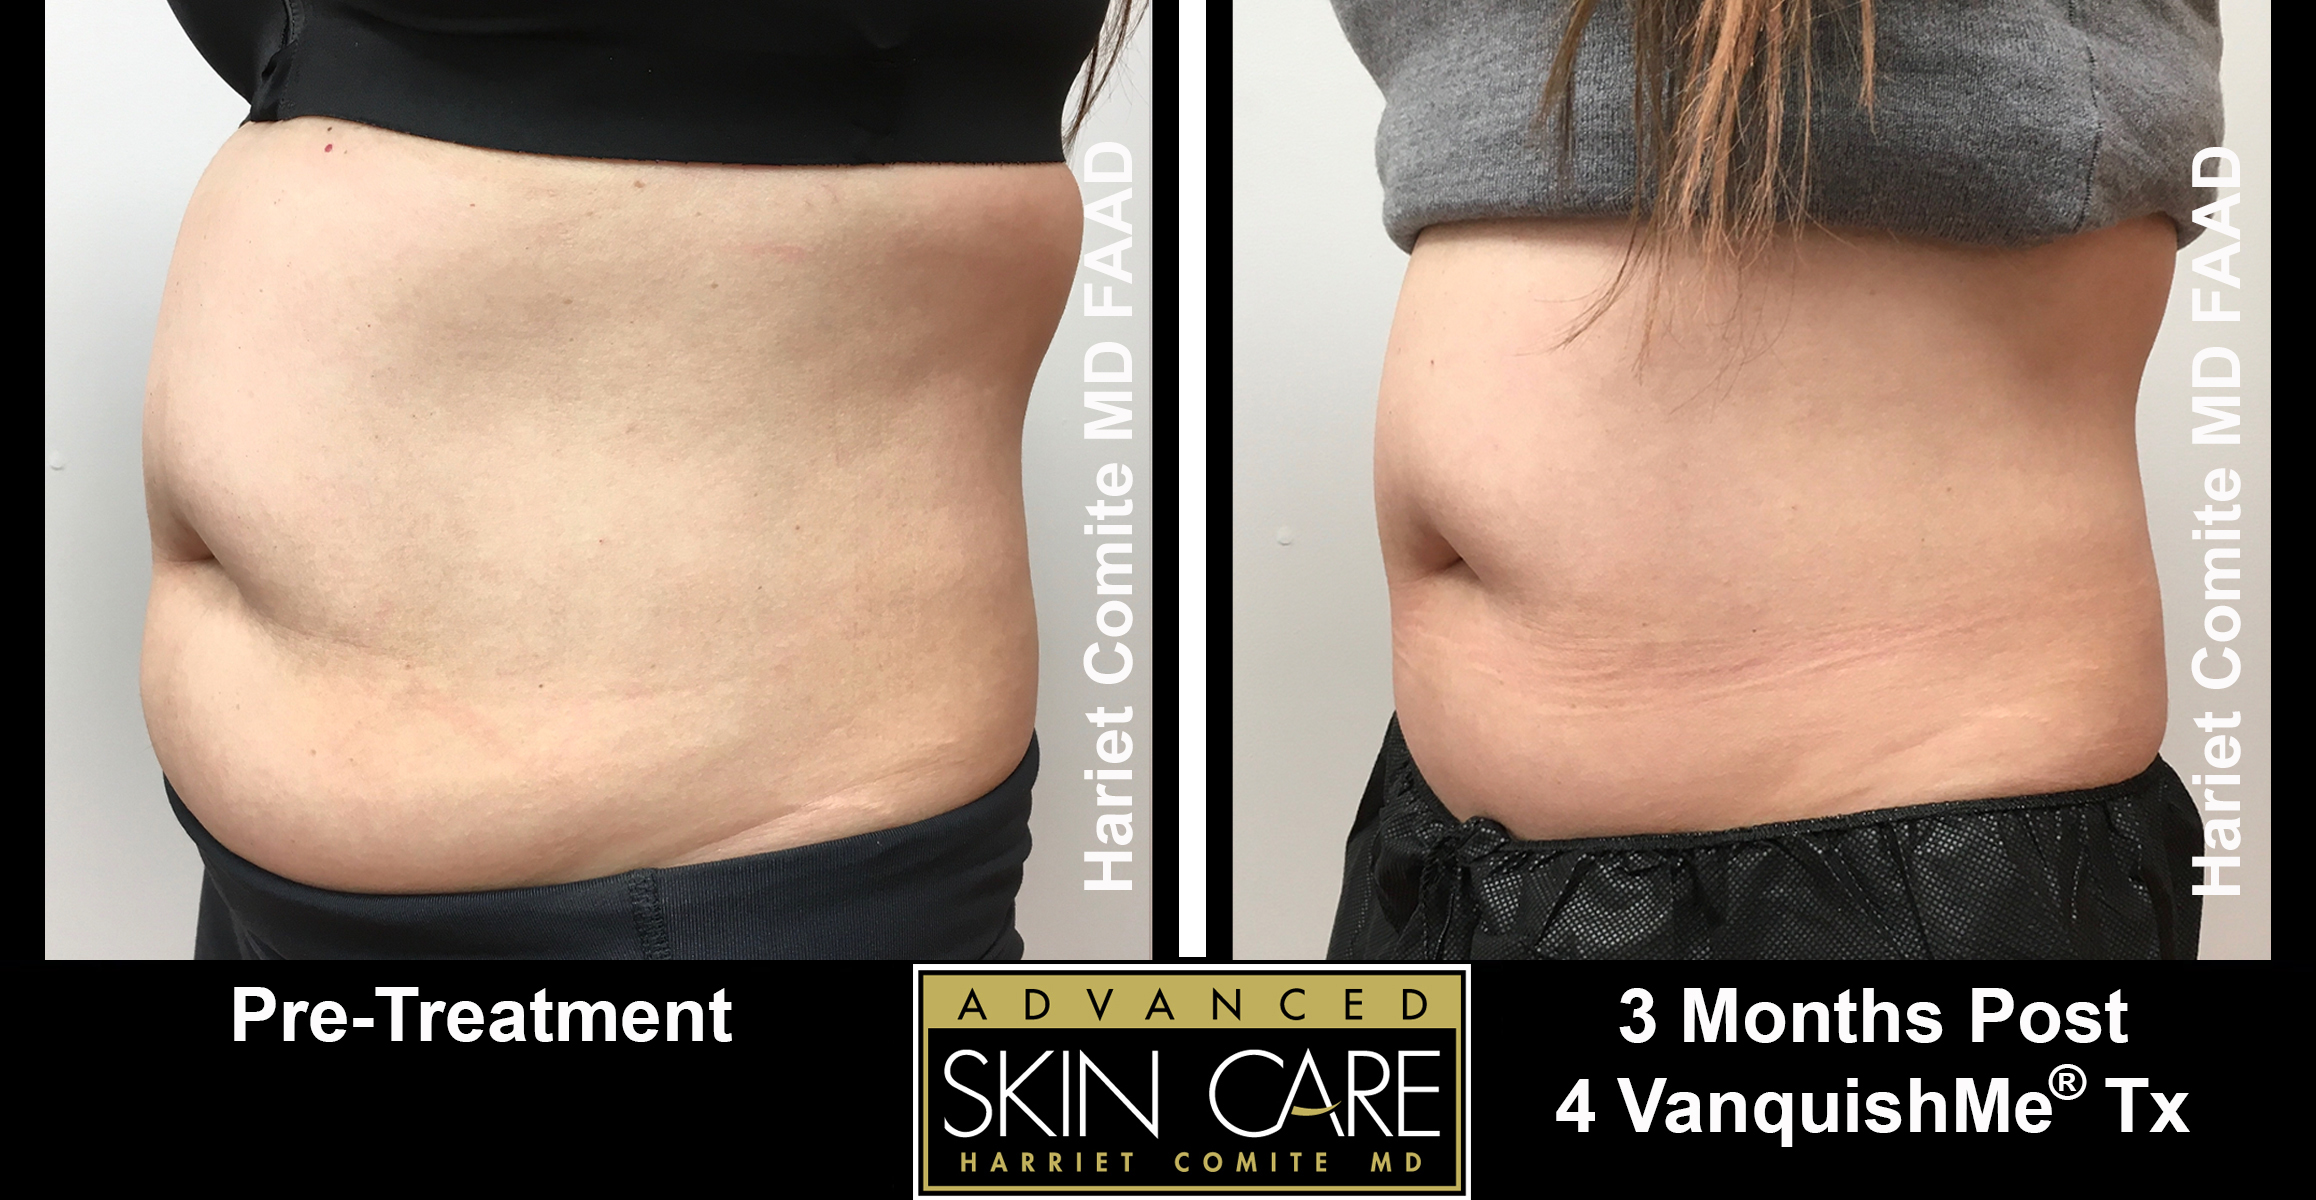 VANQUISH ME - Advanced Skin Care, Laser & Body Contouring Center